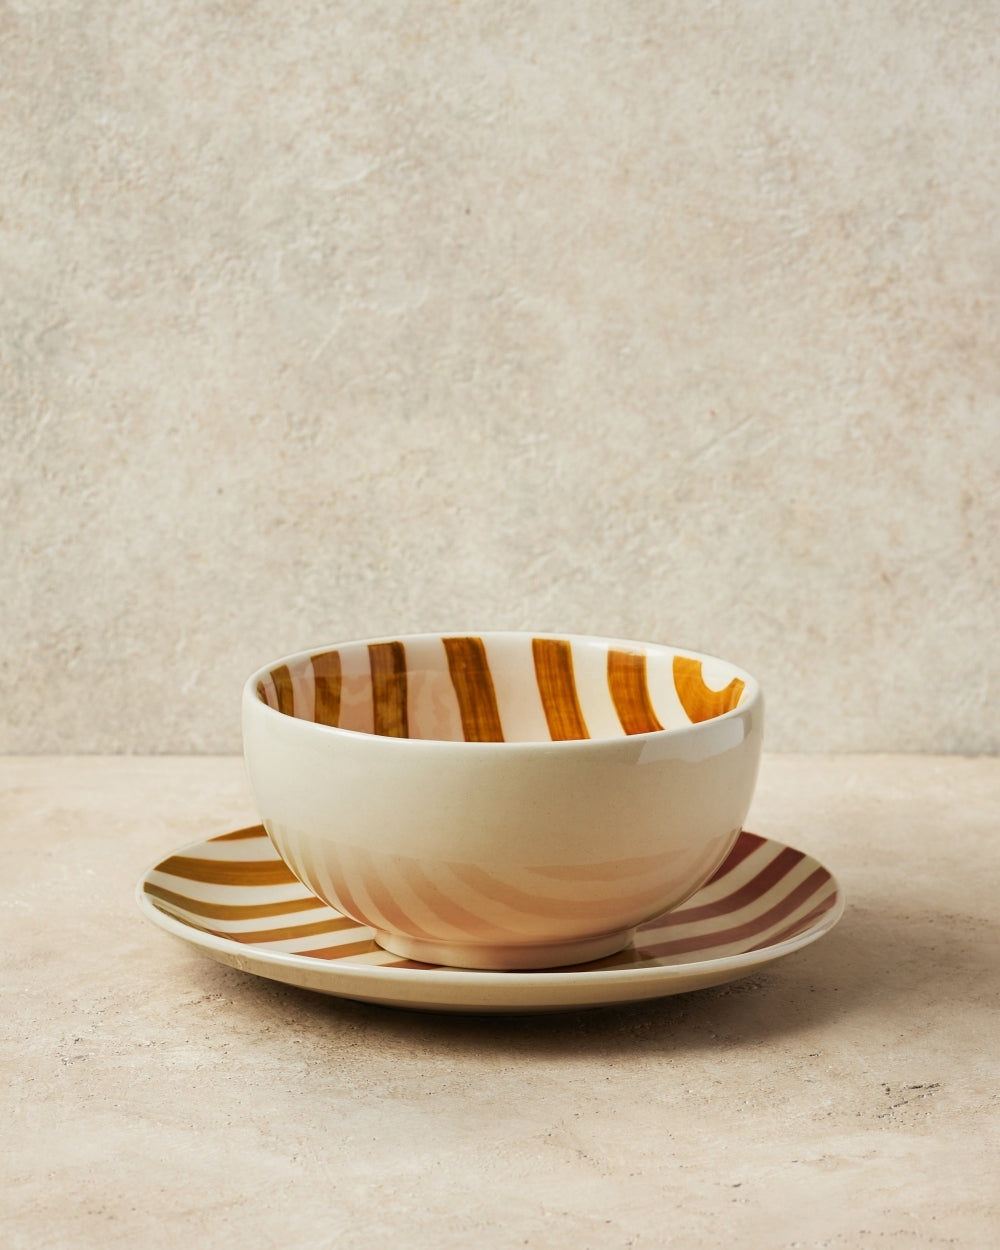 Stripe Small Bowl Set of 4 - Terracotta